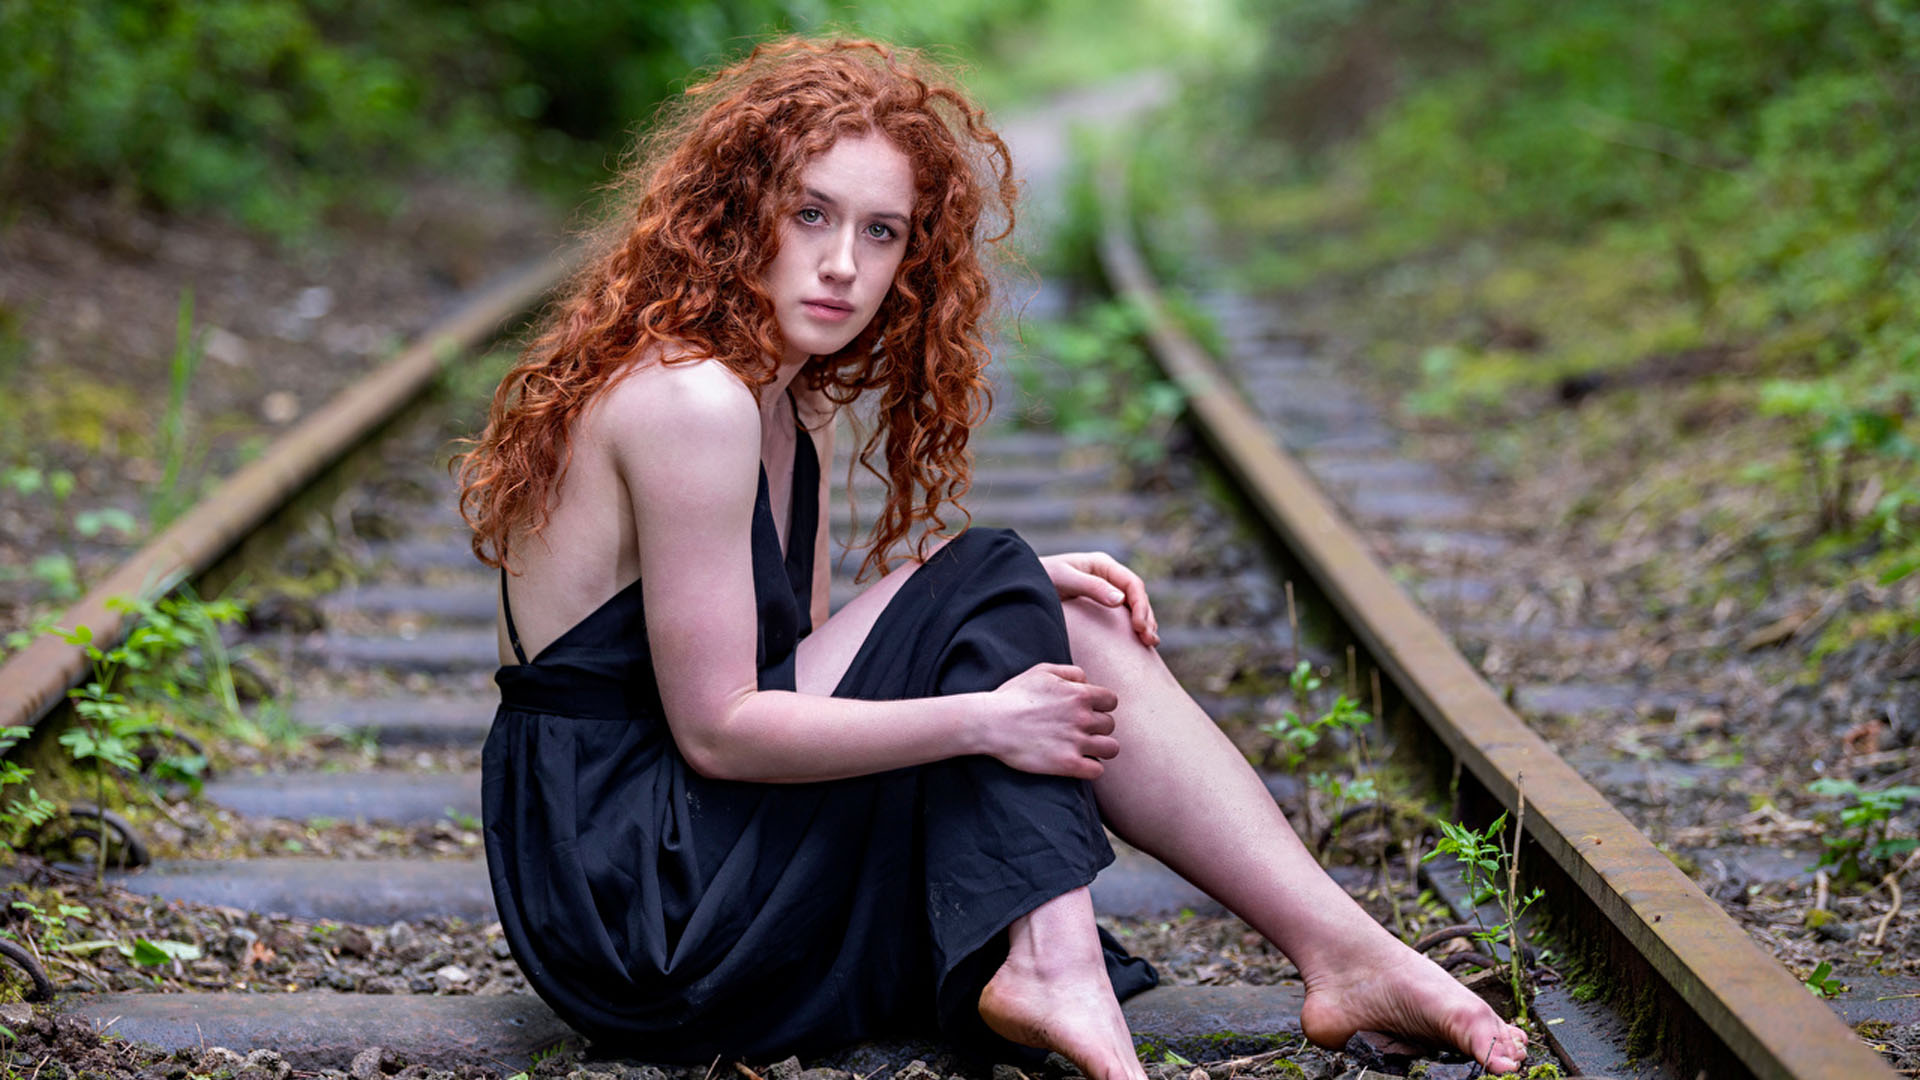 Redhead Curly Hair Girl Model Is Wearing Black Dress Sitting On Railway Track 2K Girls